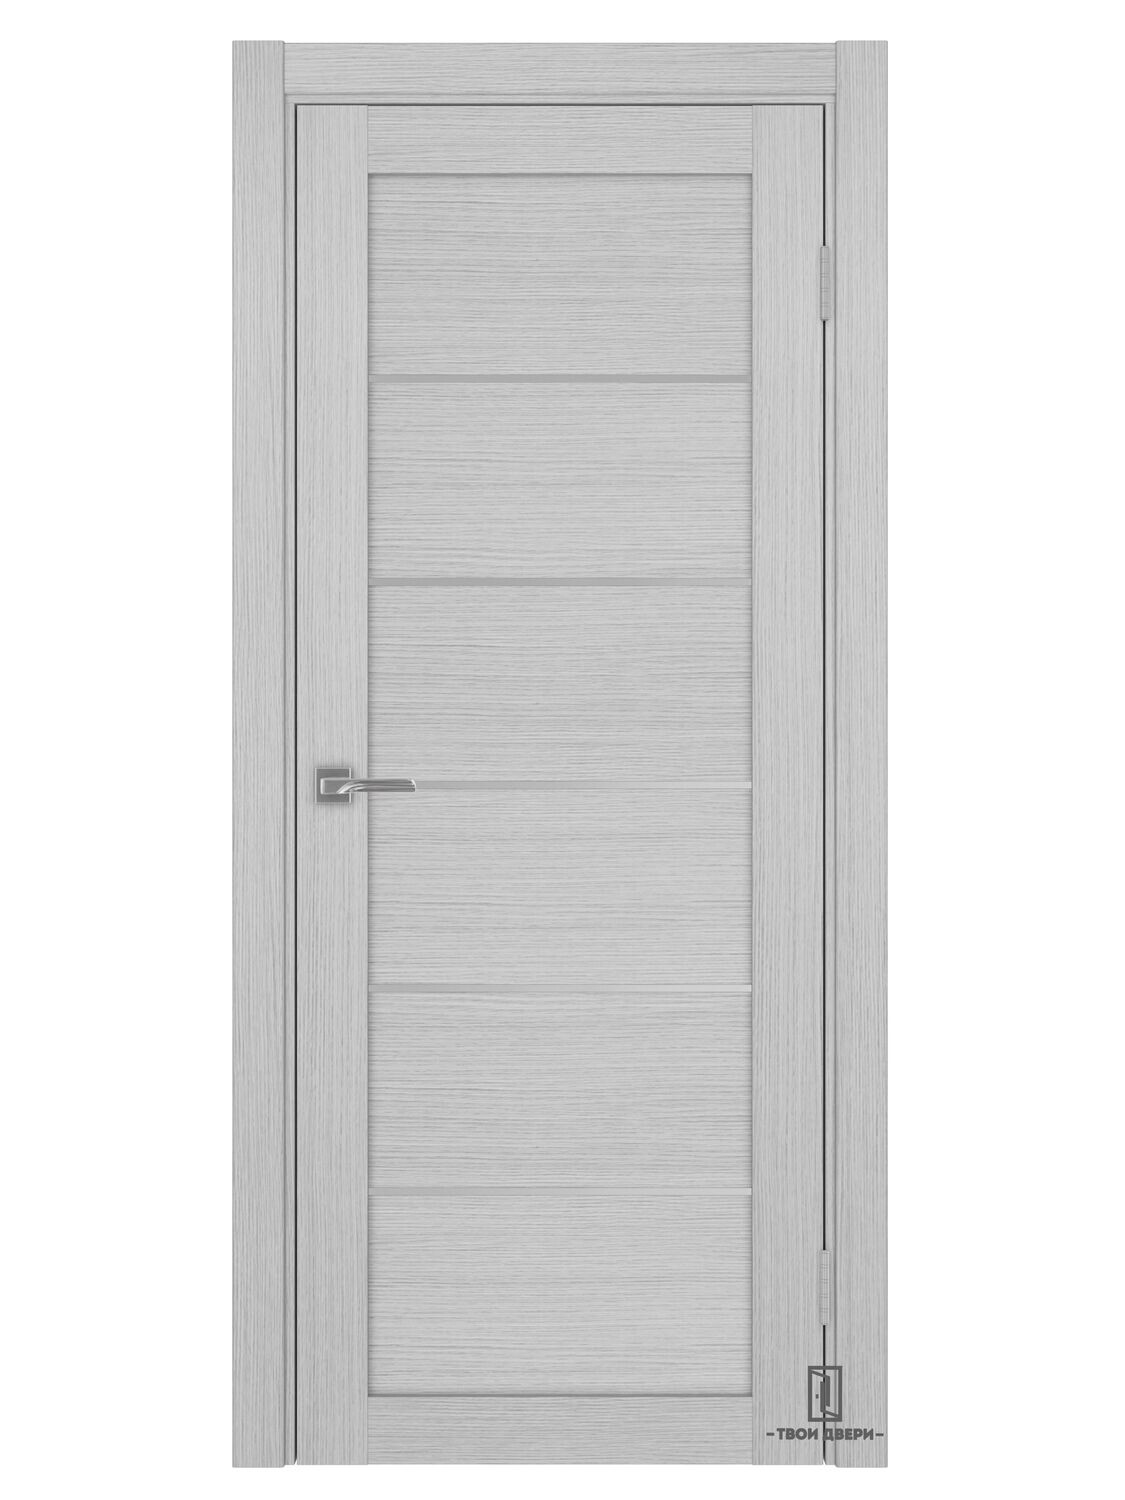 Дверь межкомнатная АПП 501.1 (молдинги), дуб серый